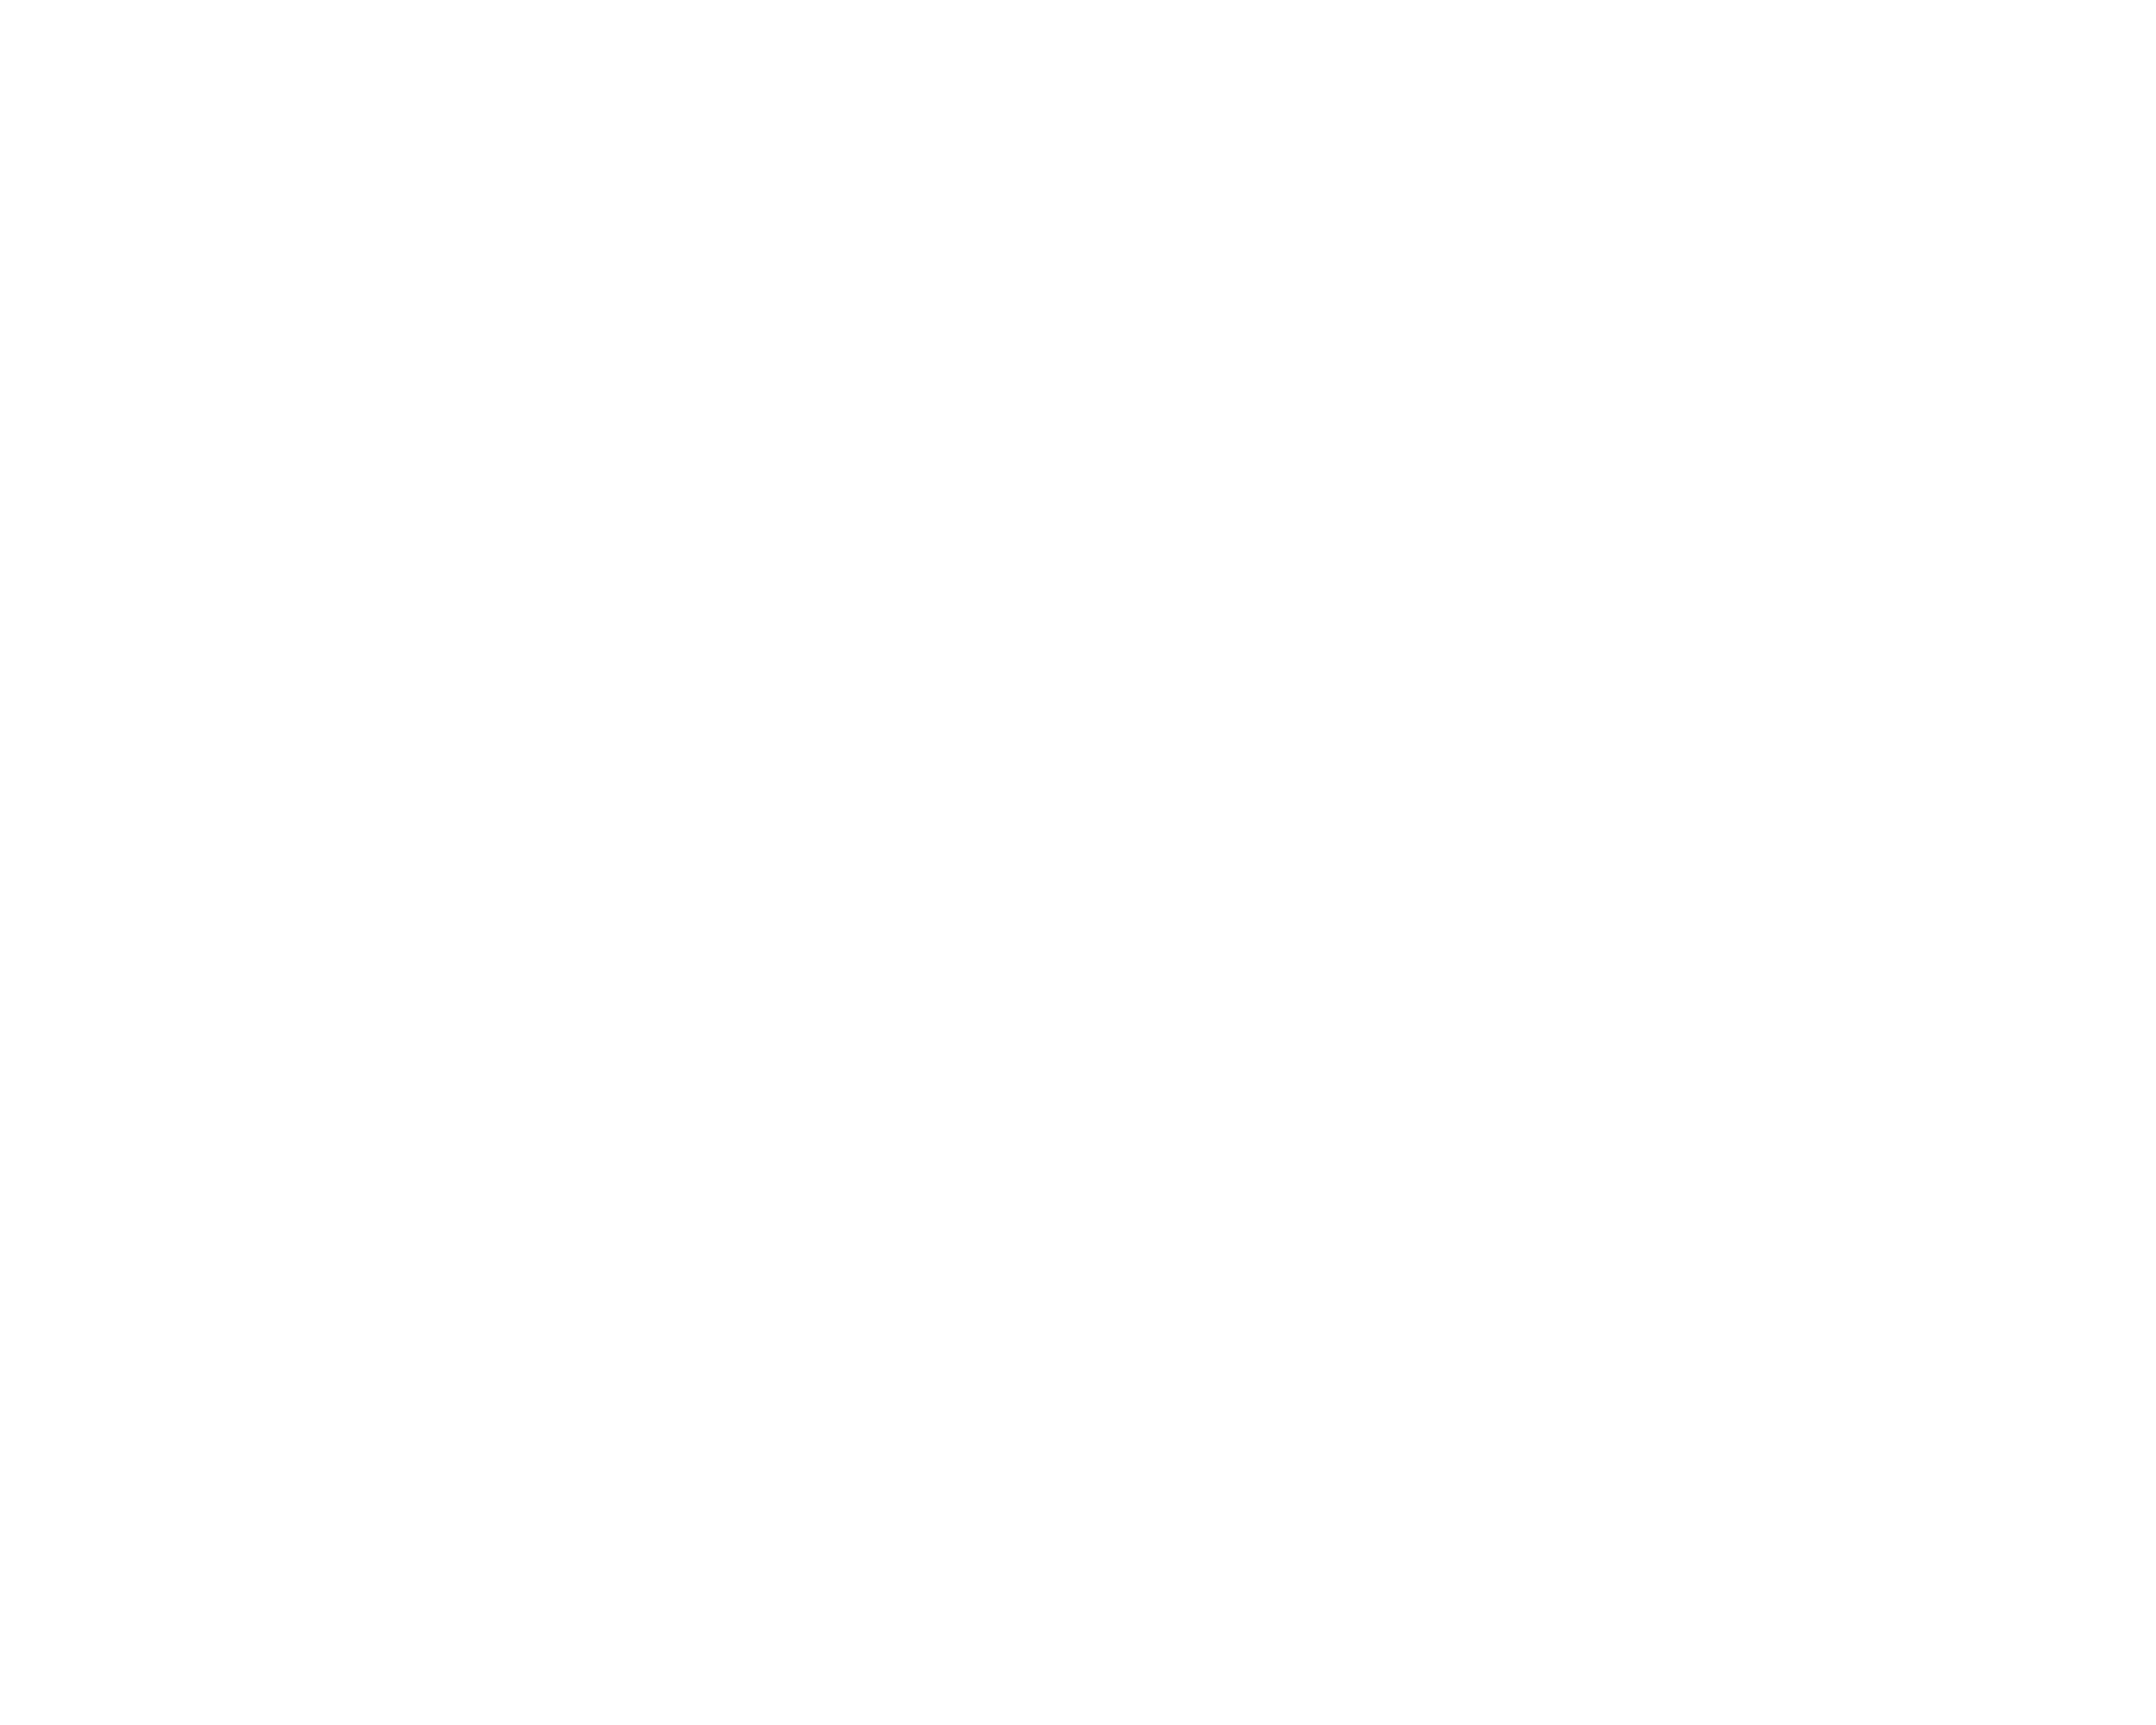 logo McDonalds